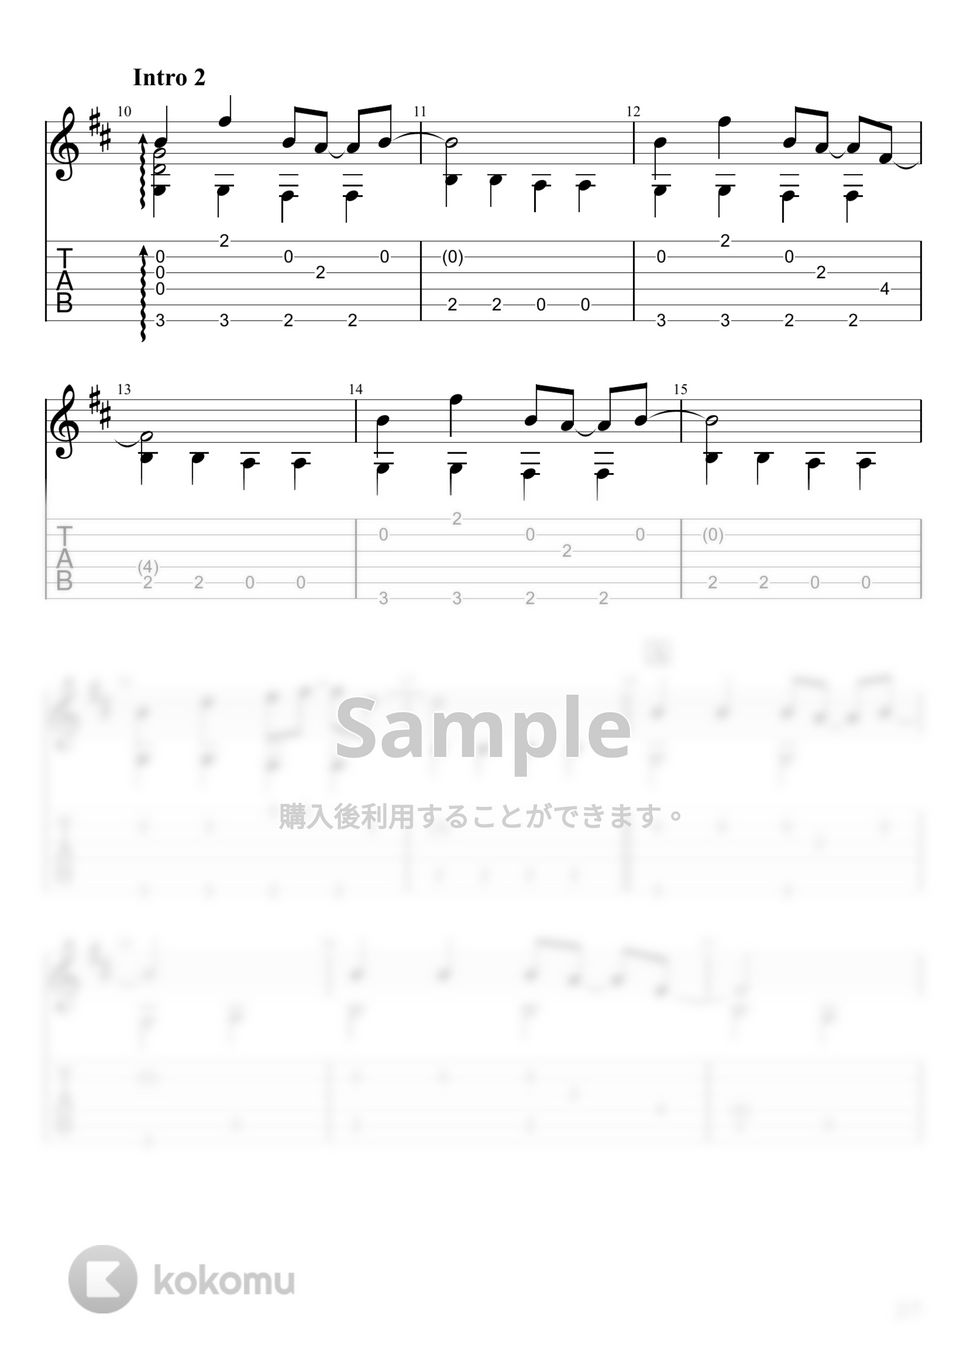 Yukopi - 寝起きヤシの木 (ソロギター) by u3danchou